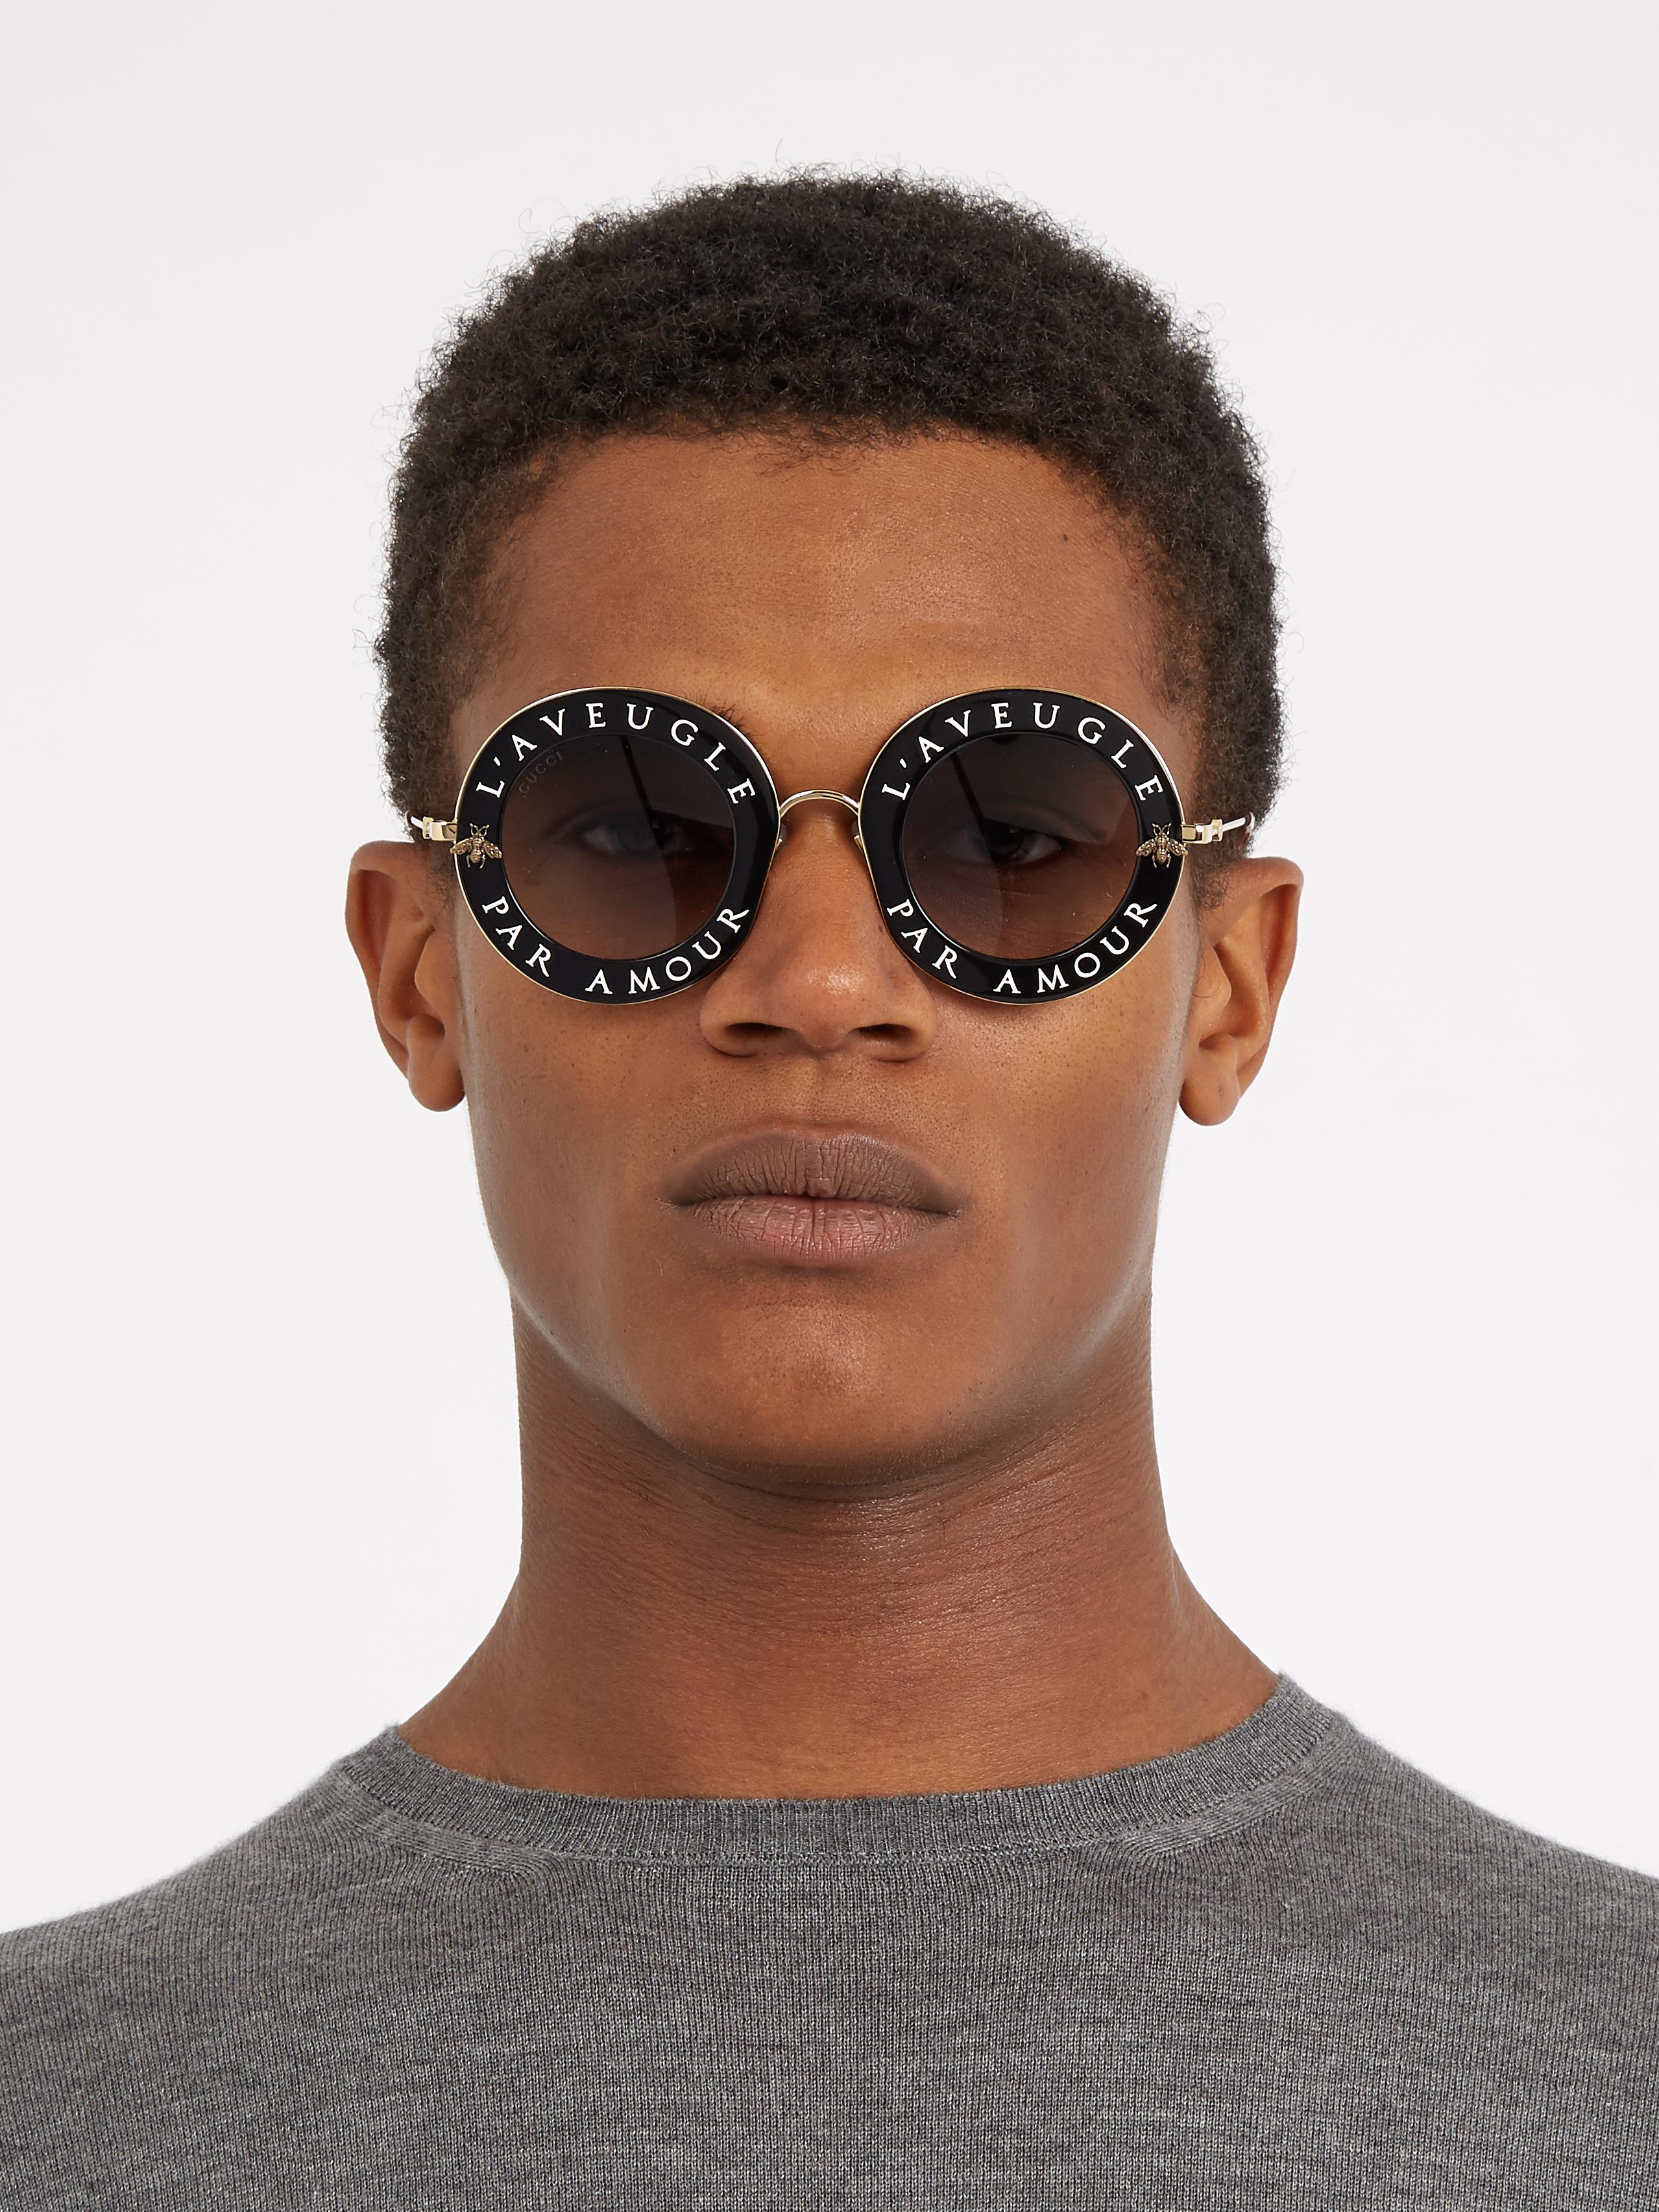 Gucci L'aveugle Par Amour Round-frame Sunglasses in Black for Men - Lyst